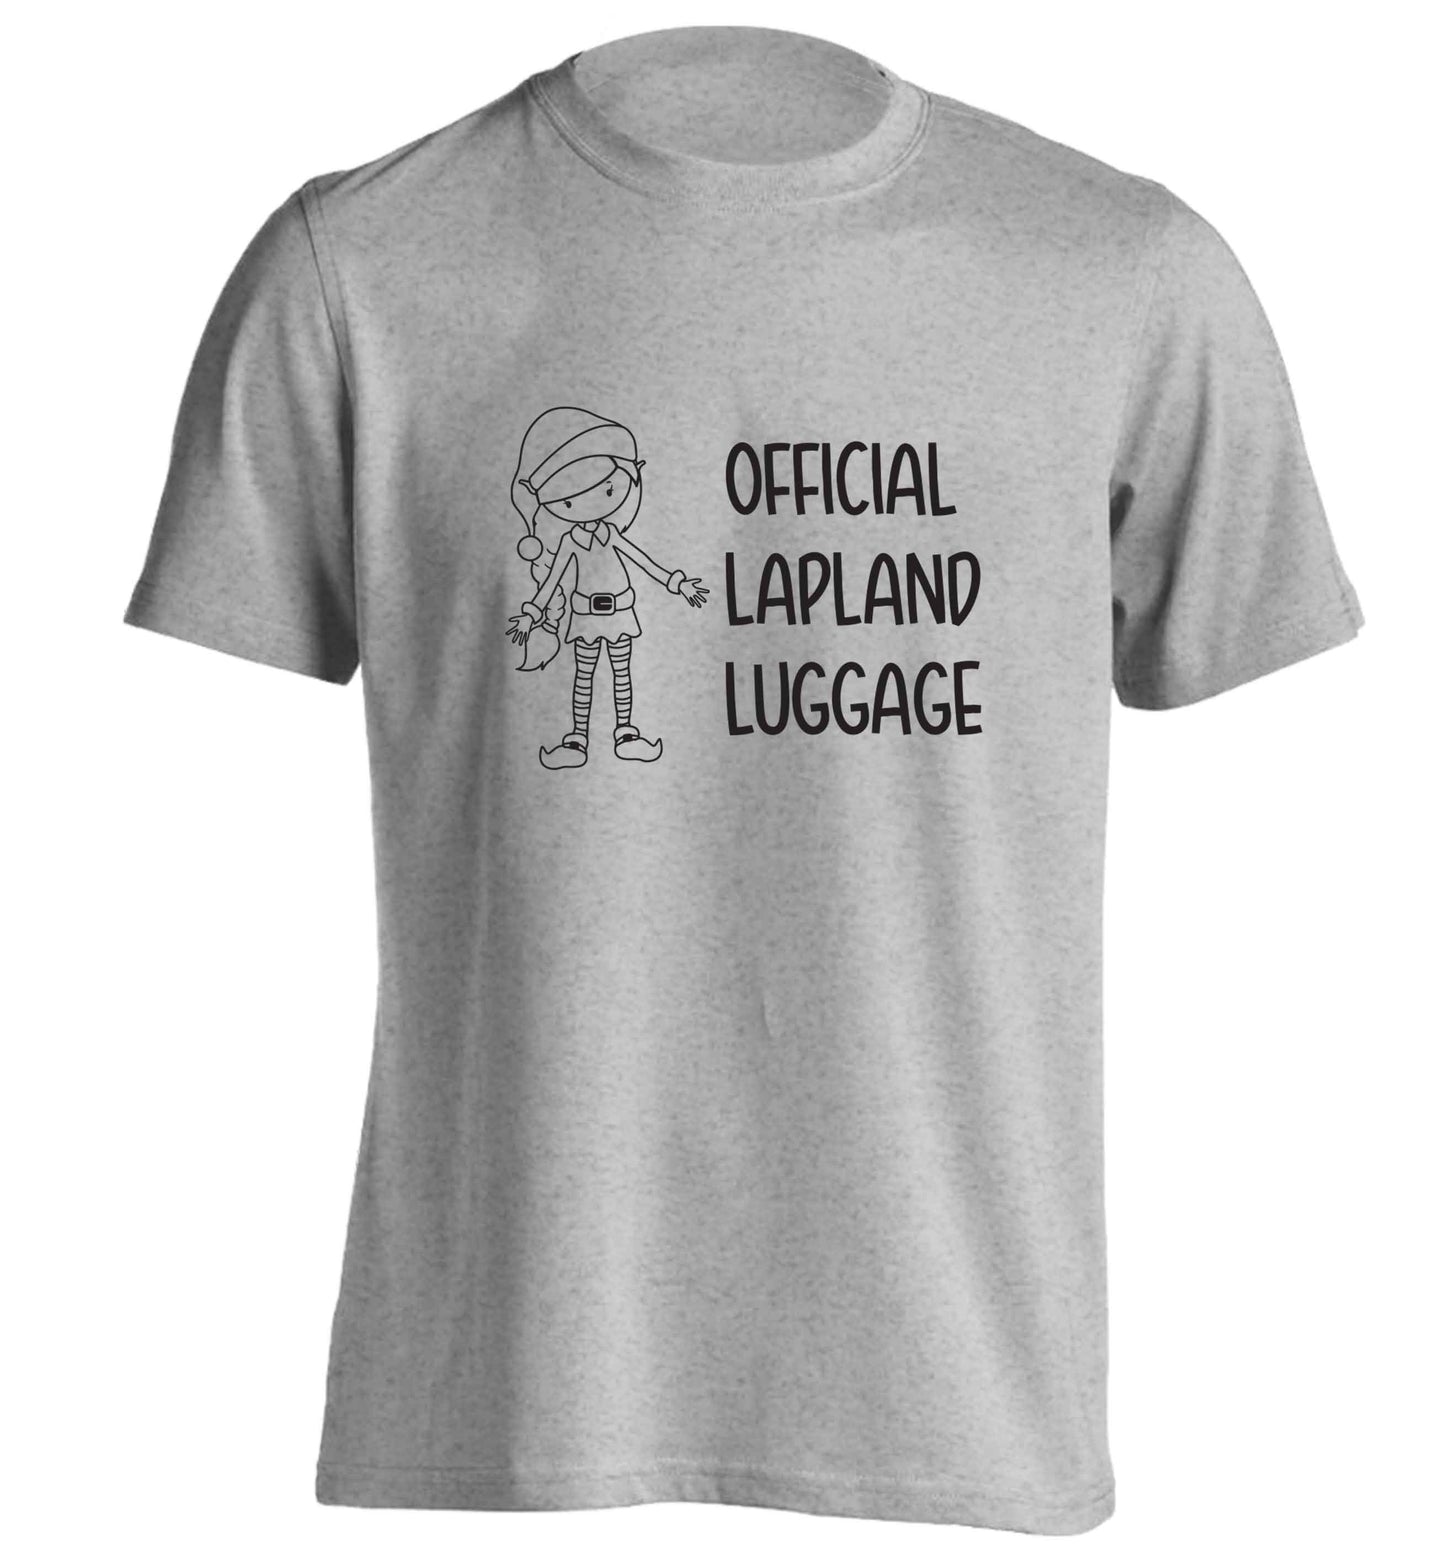 Official lapland luggage - Elf snowflake adults unisex grey Tshirt 2XL